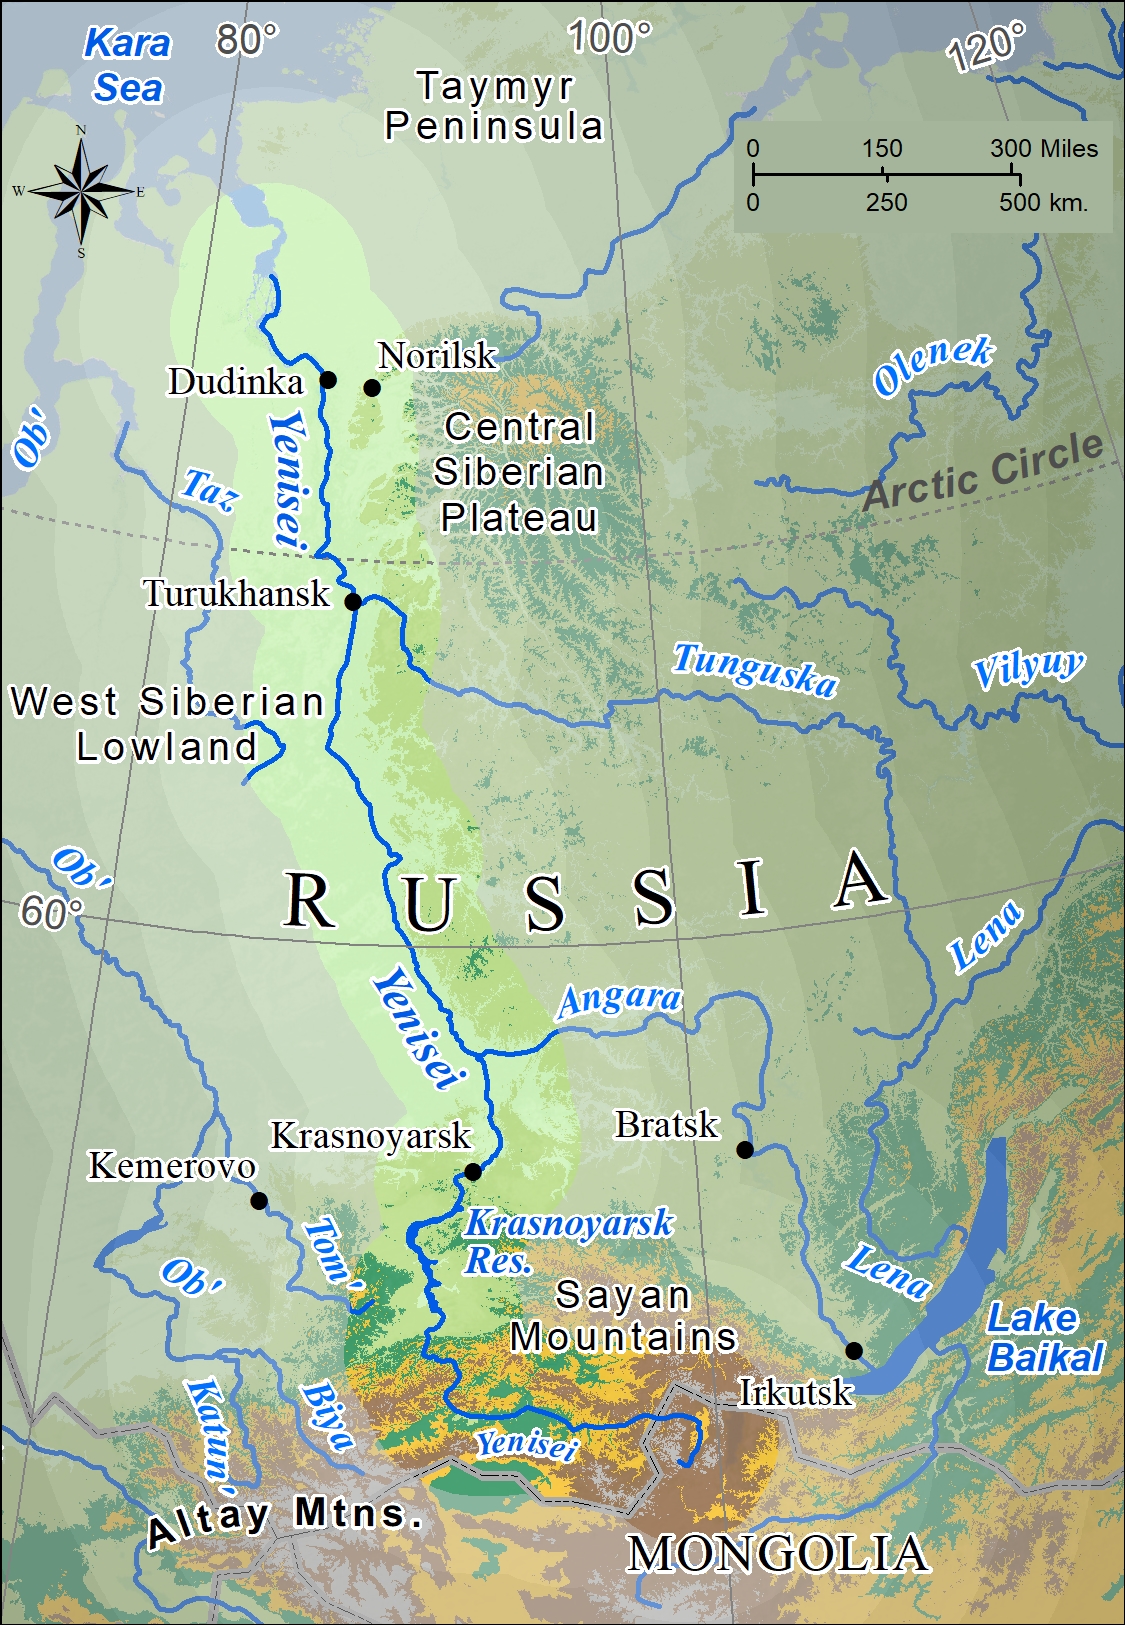 ob river world map